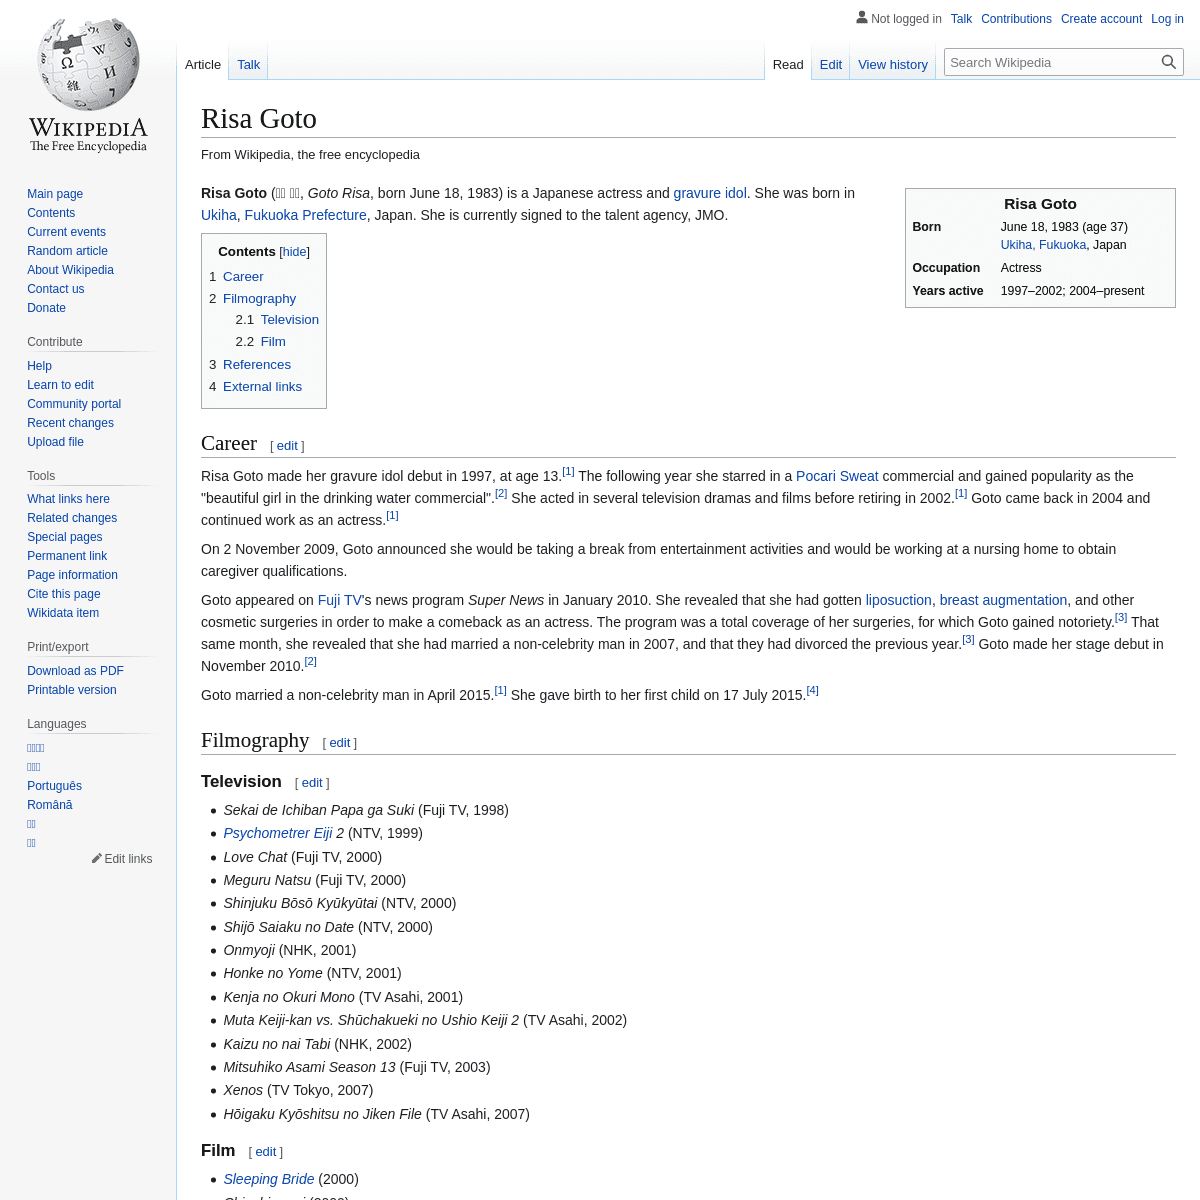 A complete backup of https://en.wikipedia.org/wiki/Risa_Goto